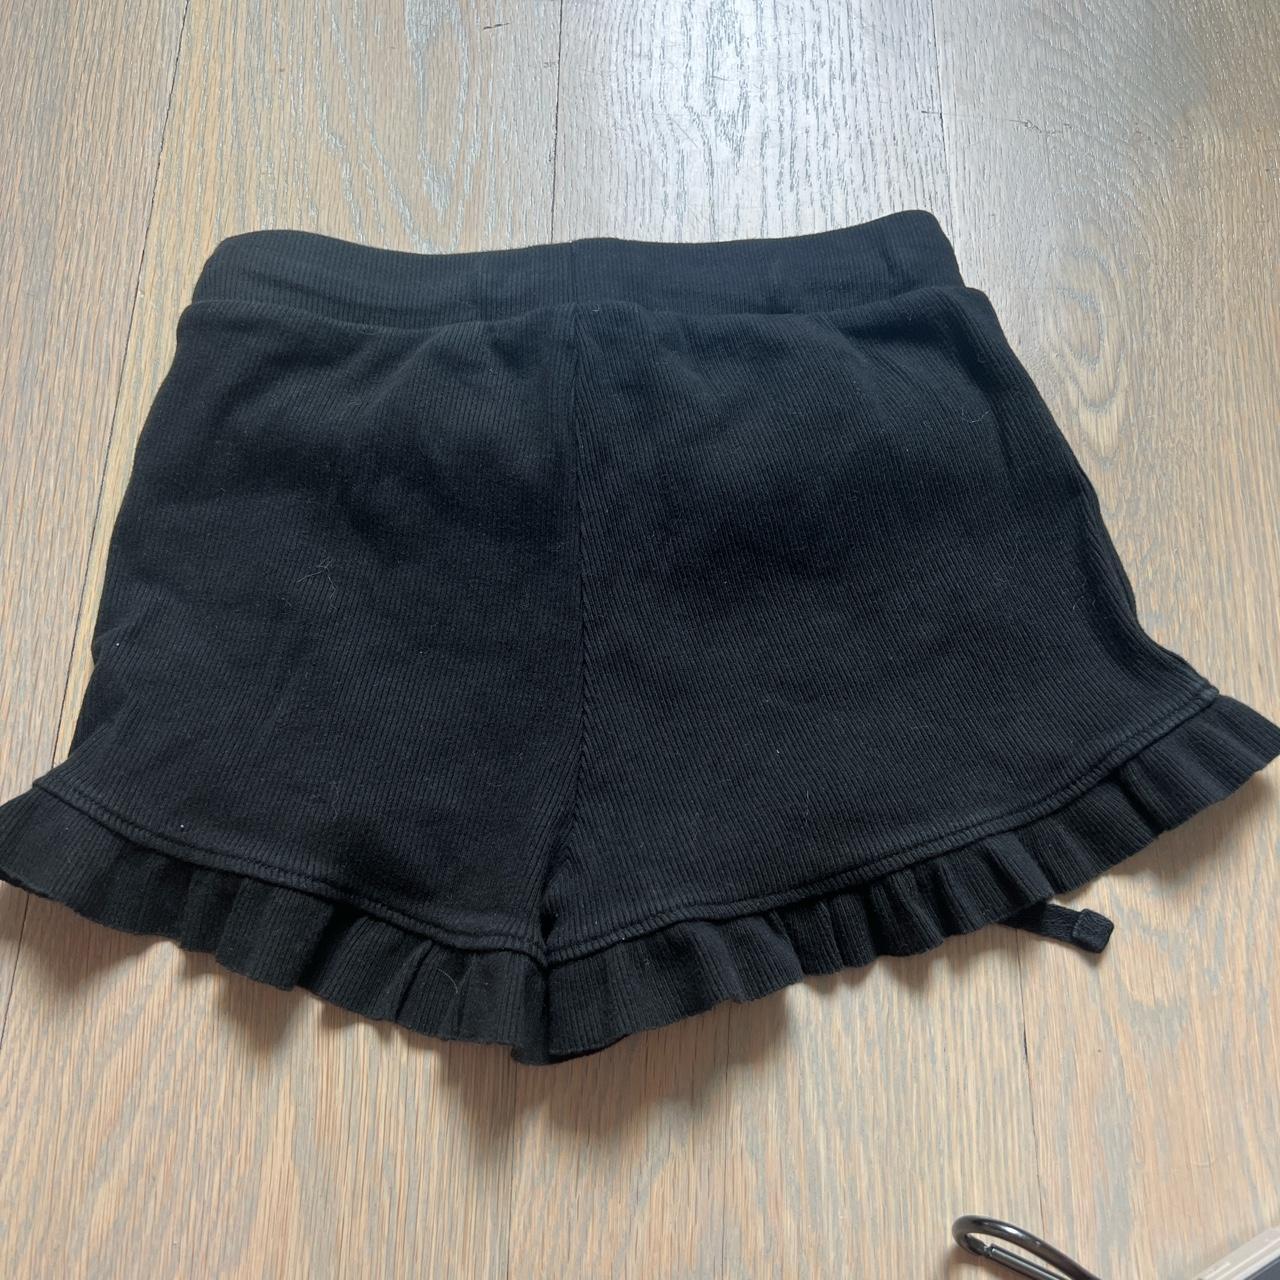 Zara black small shorts - Depop